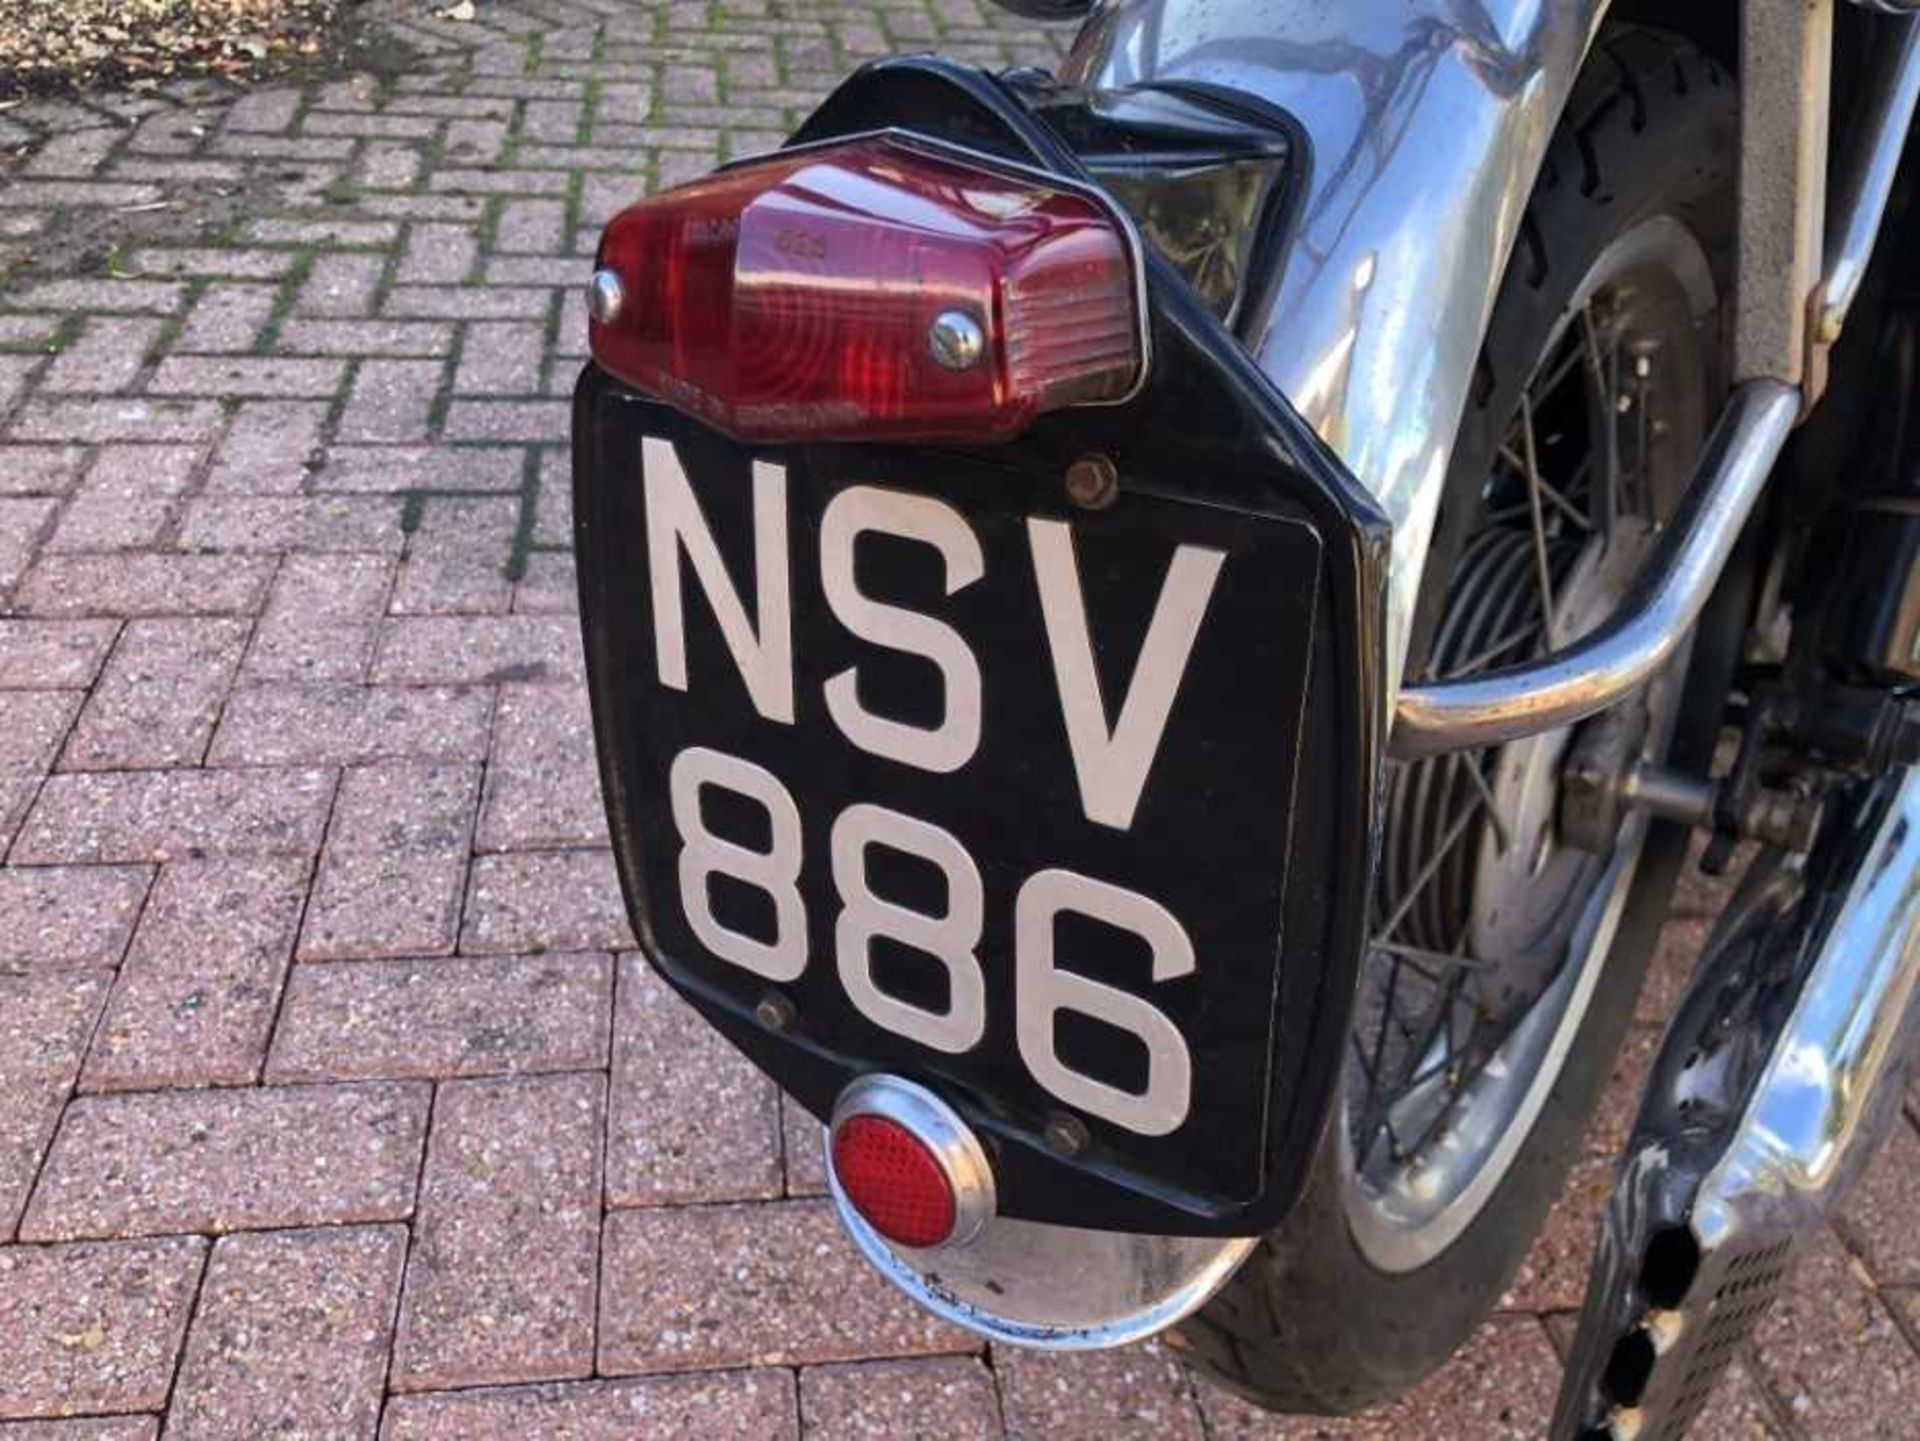 1959 Velocette 350cc motorcycle, reg. no. NSV 886, engine no. VR 2185 - Image 6 of 10